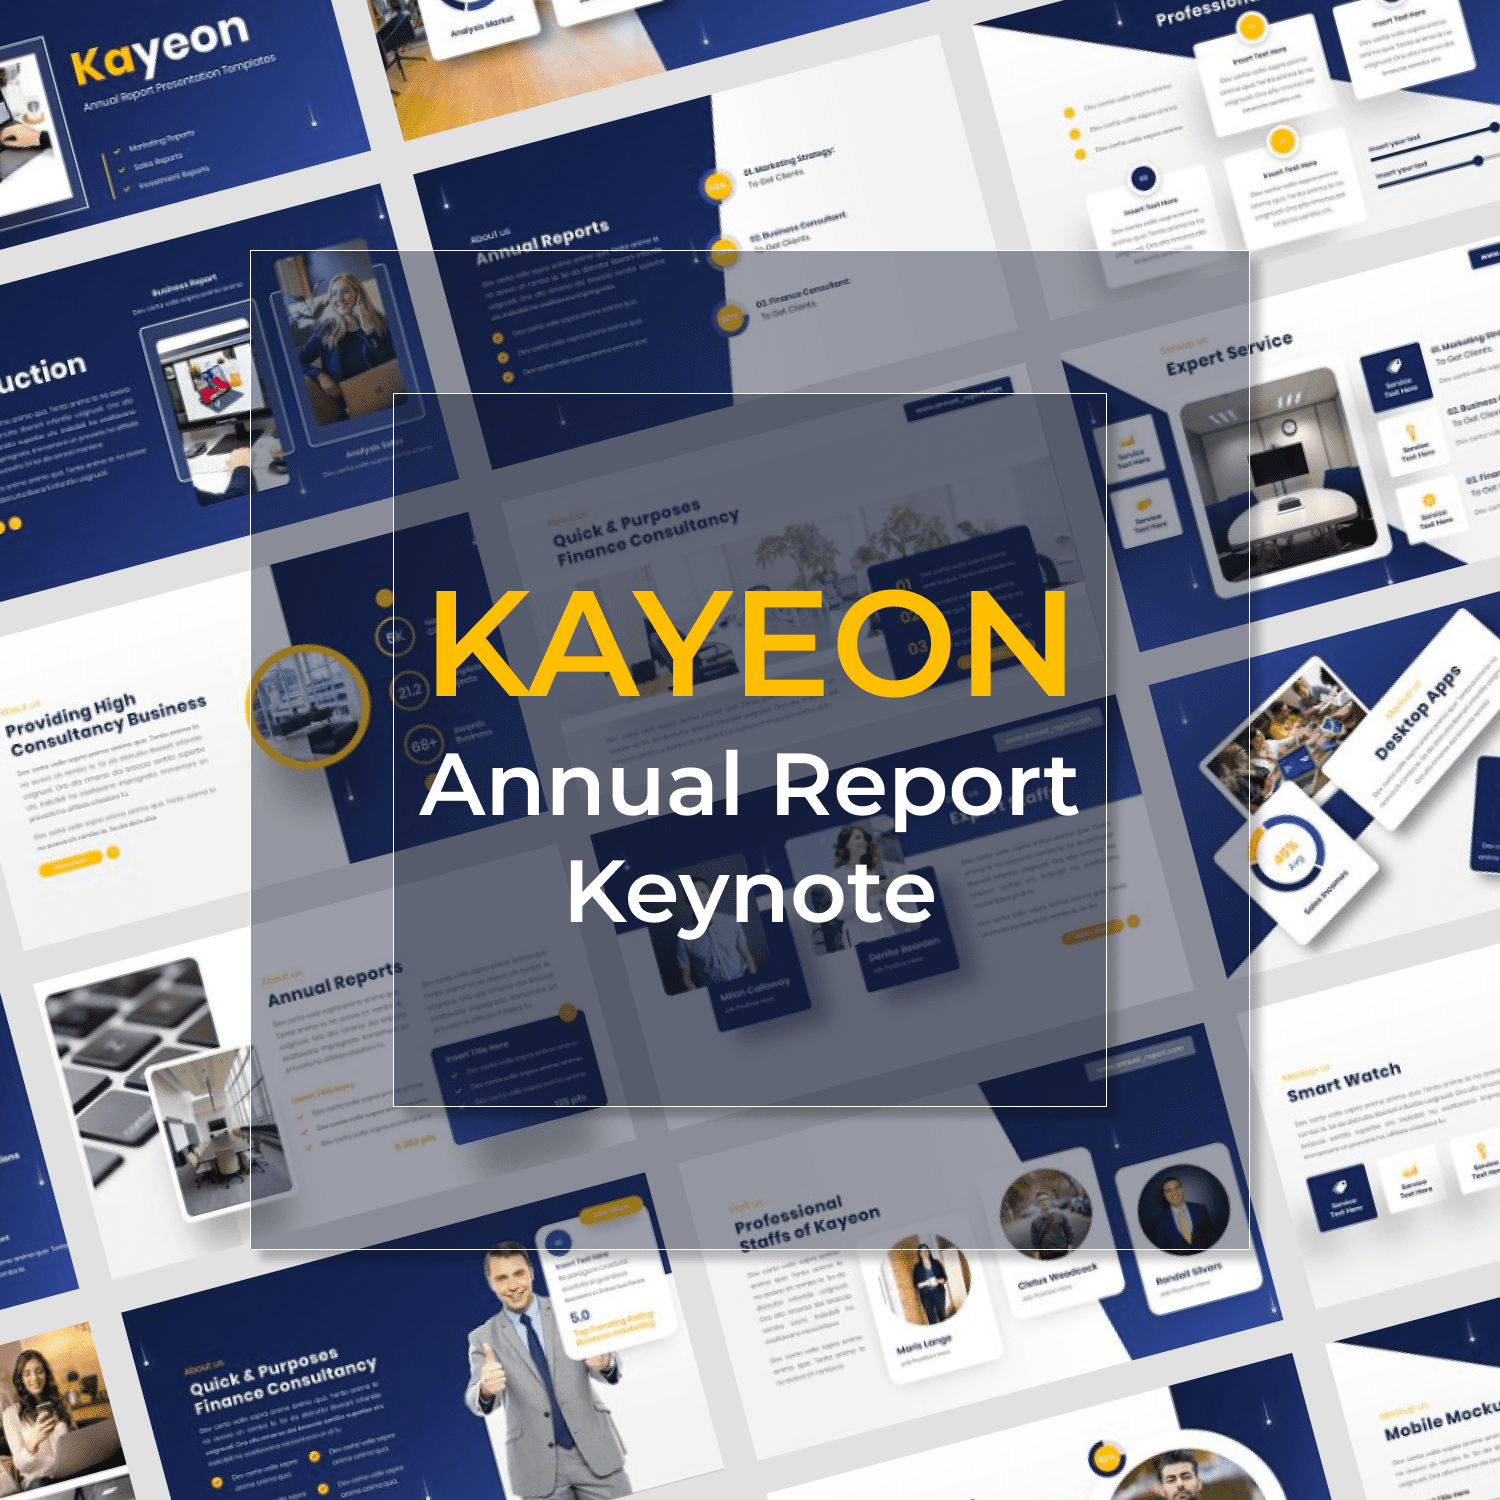 Kayeon annual report keynote.